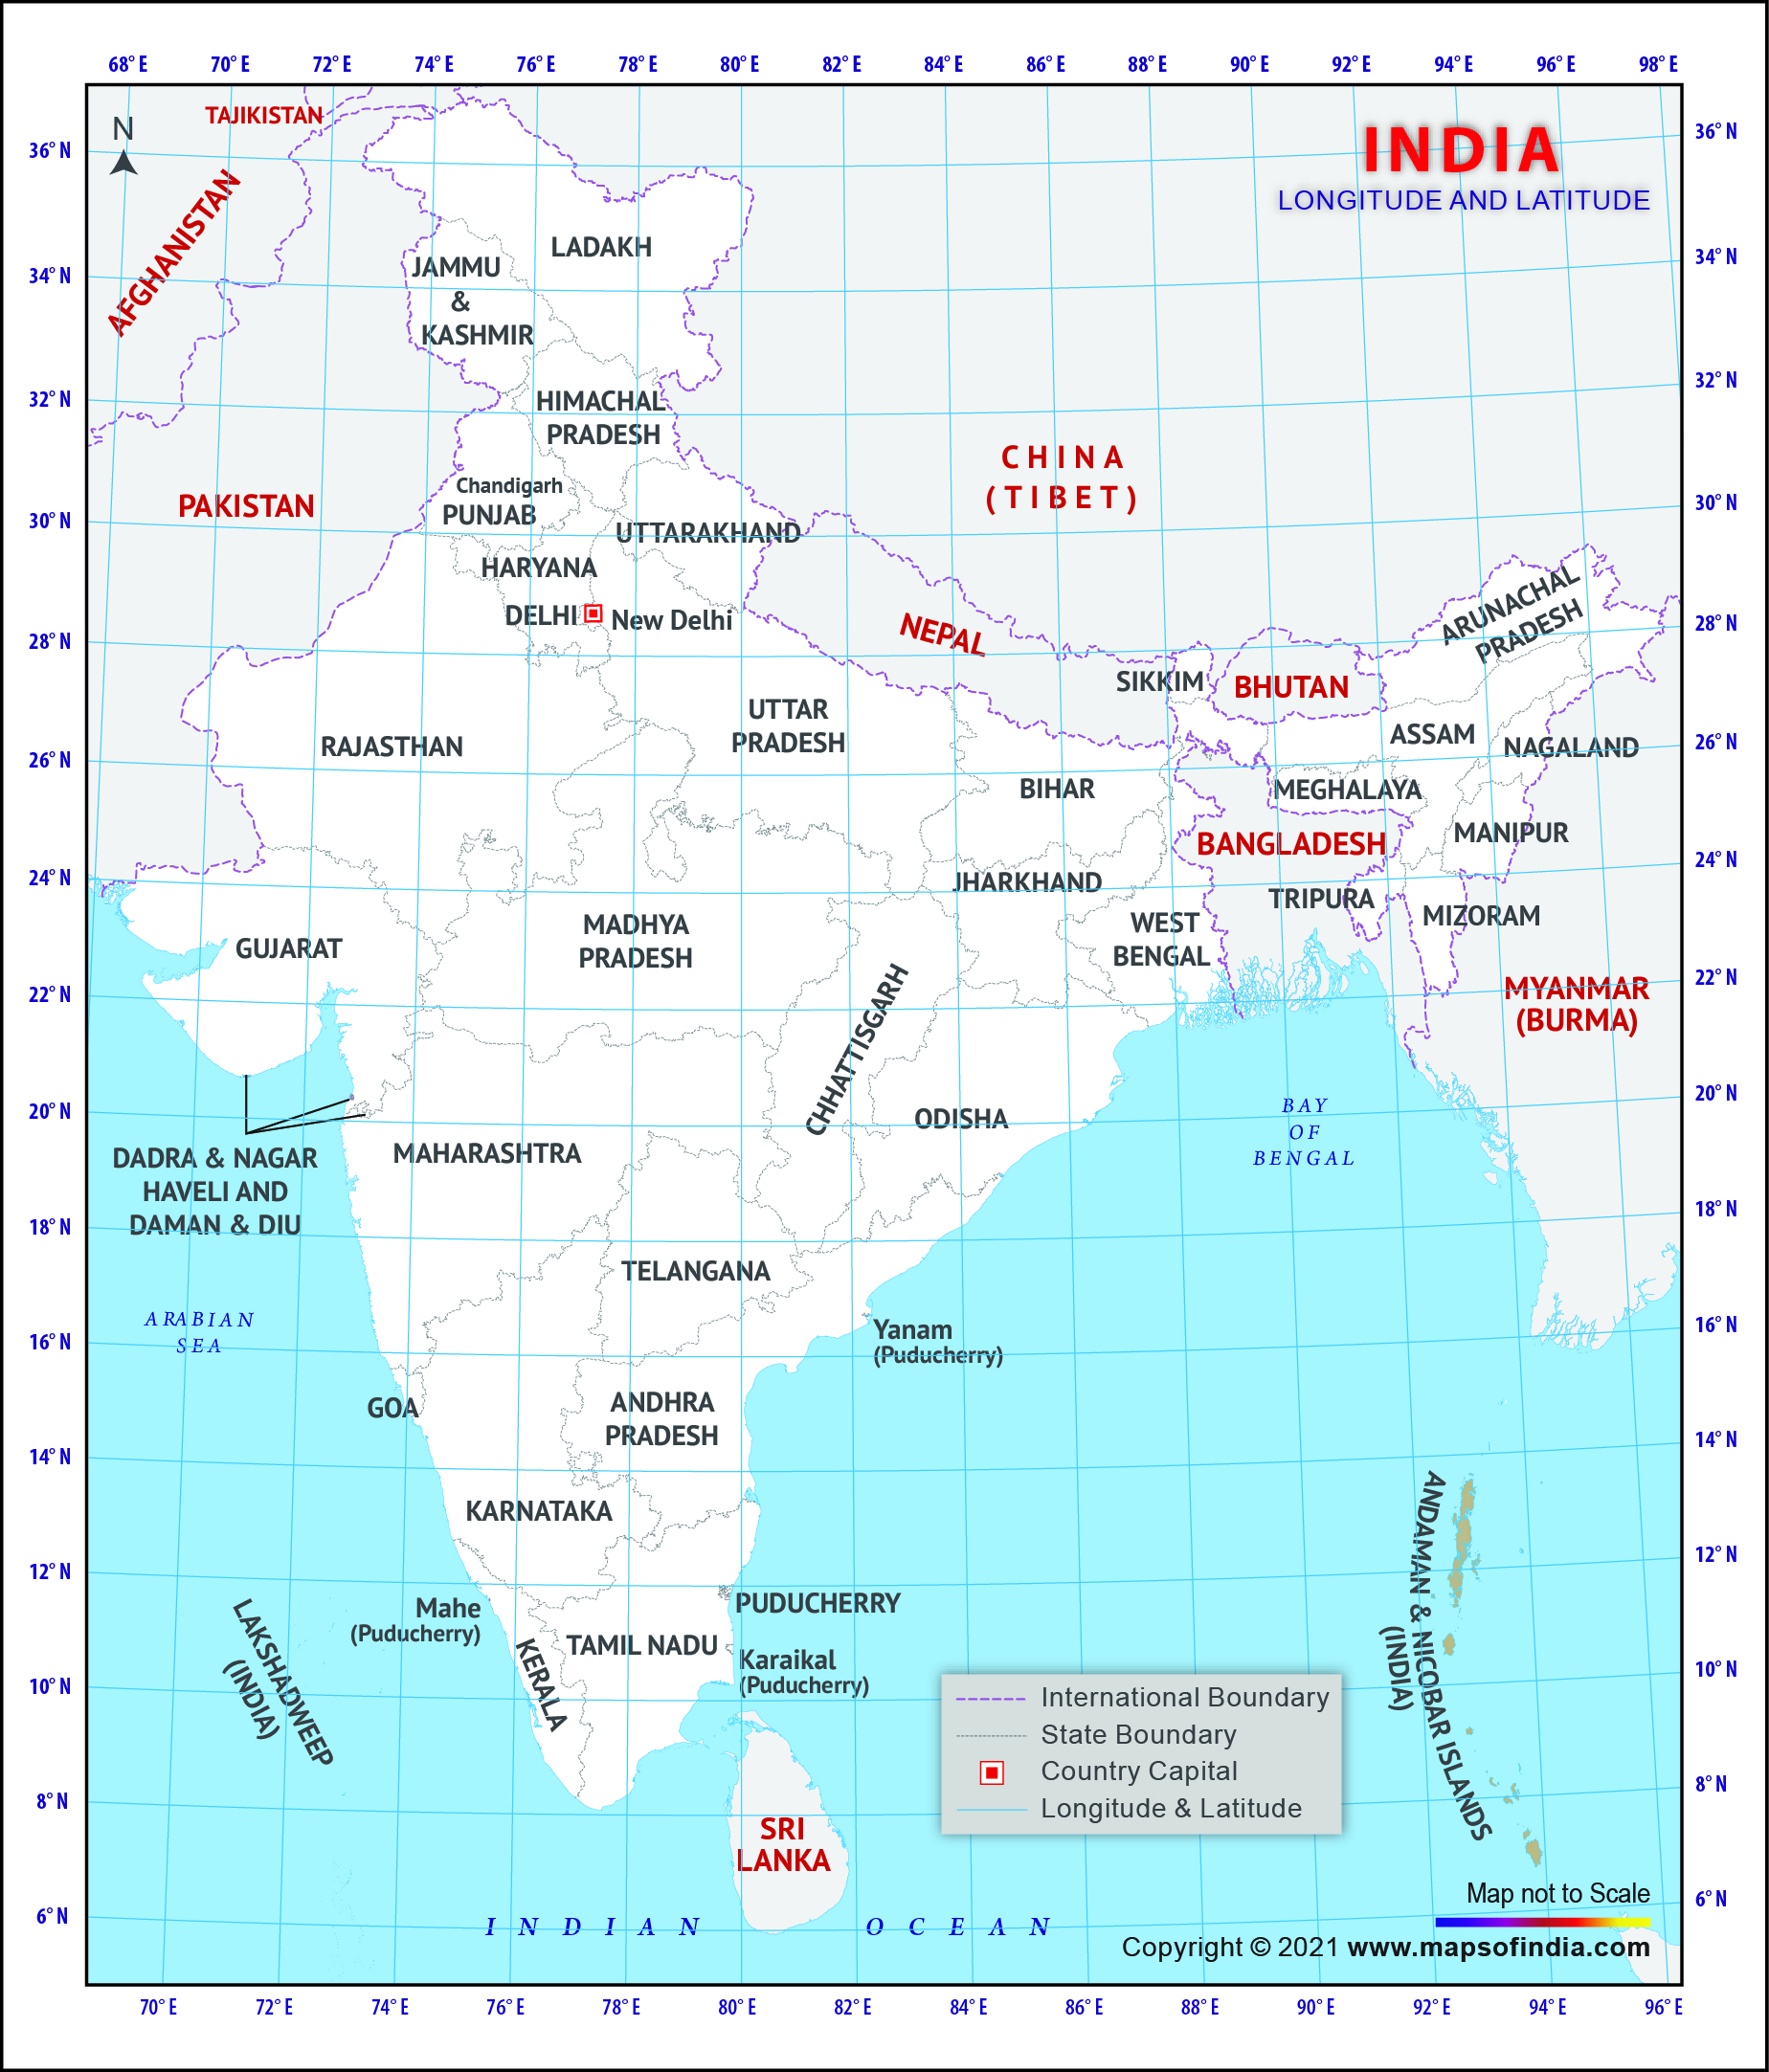 HIVLatitude and Longitude Map of India